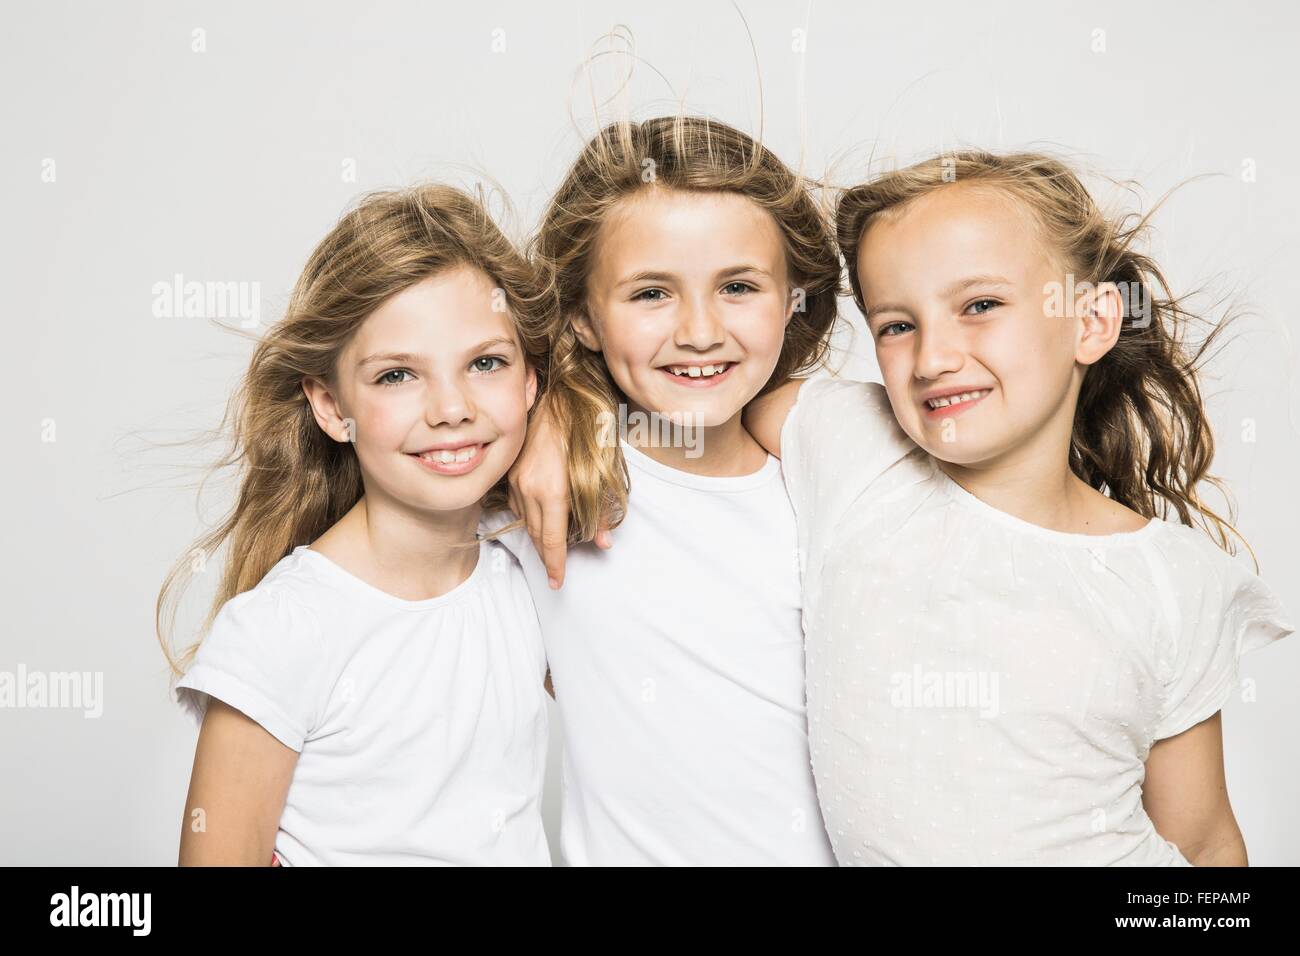 Studio portrait of three girls with long blond flyaway hair Stock Photo